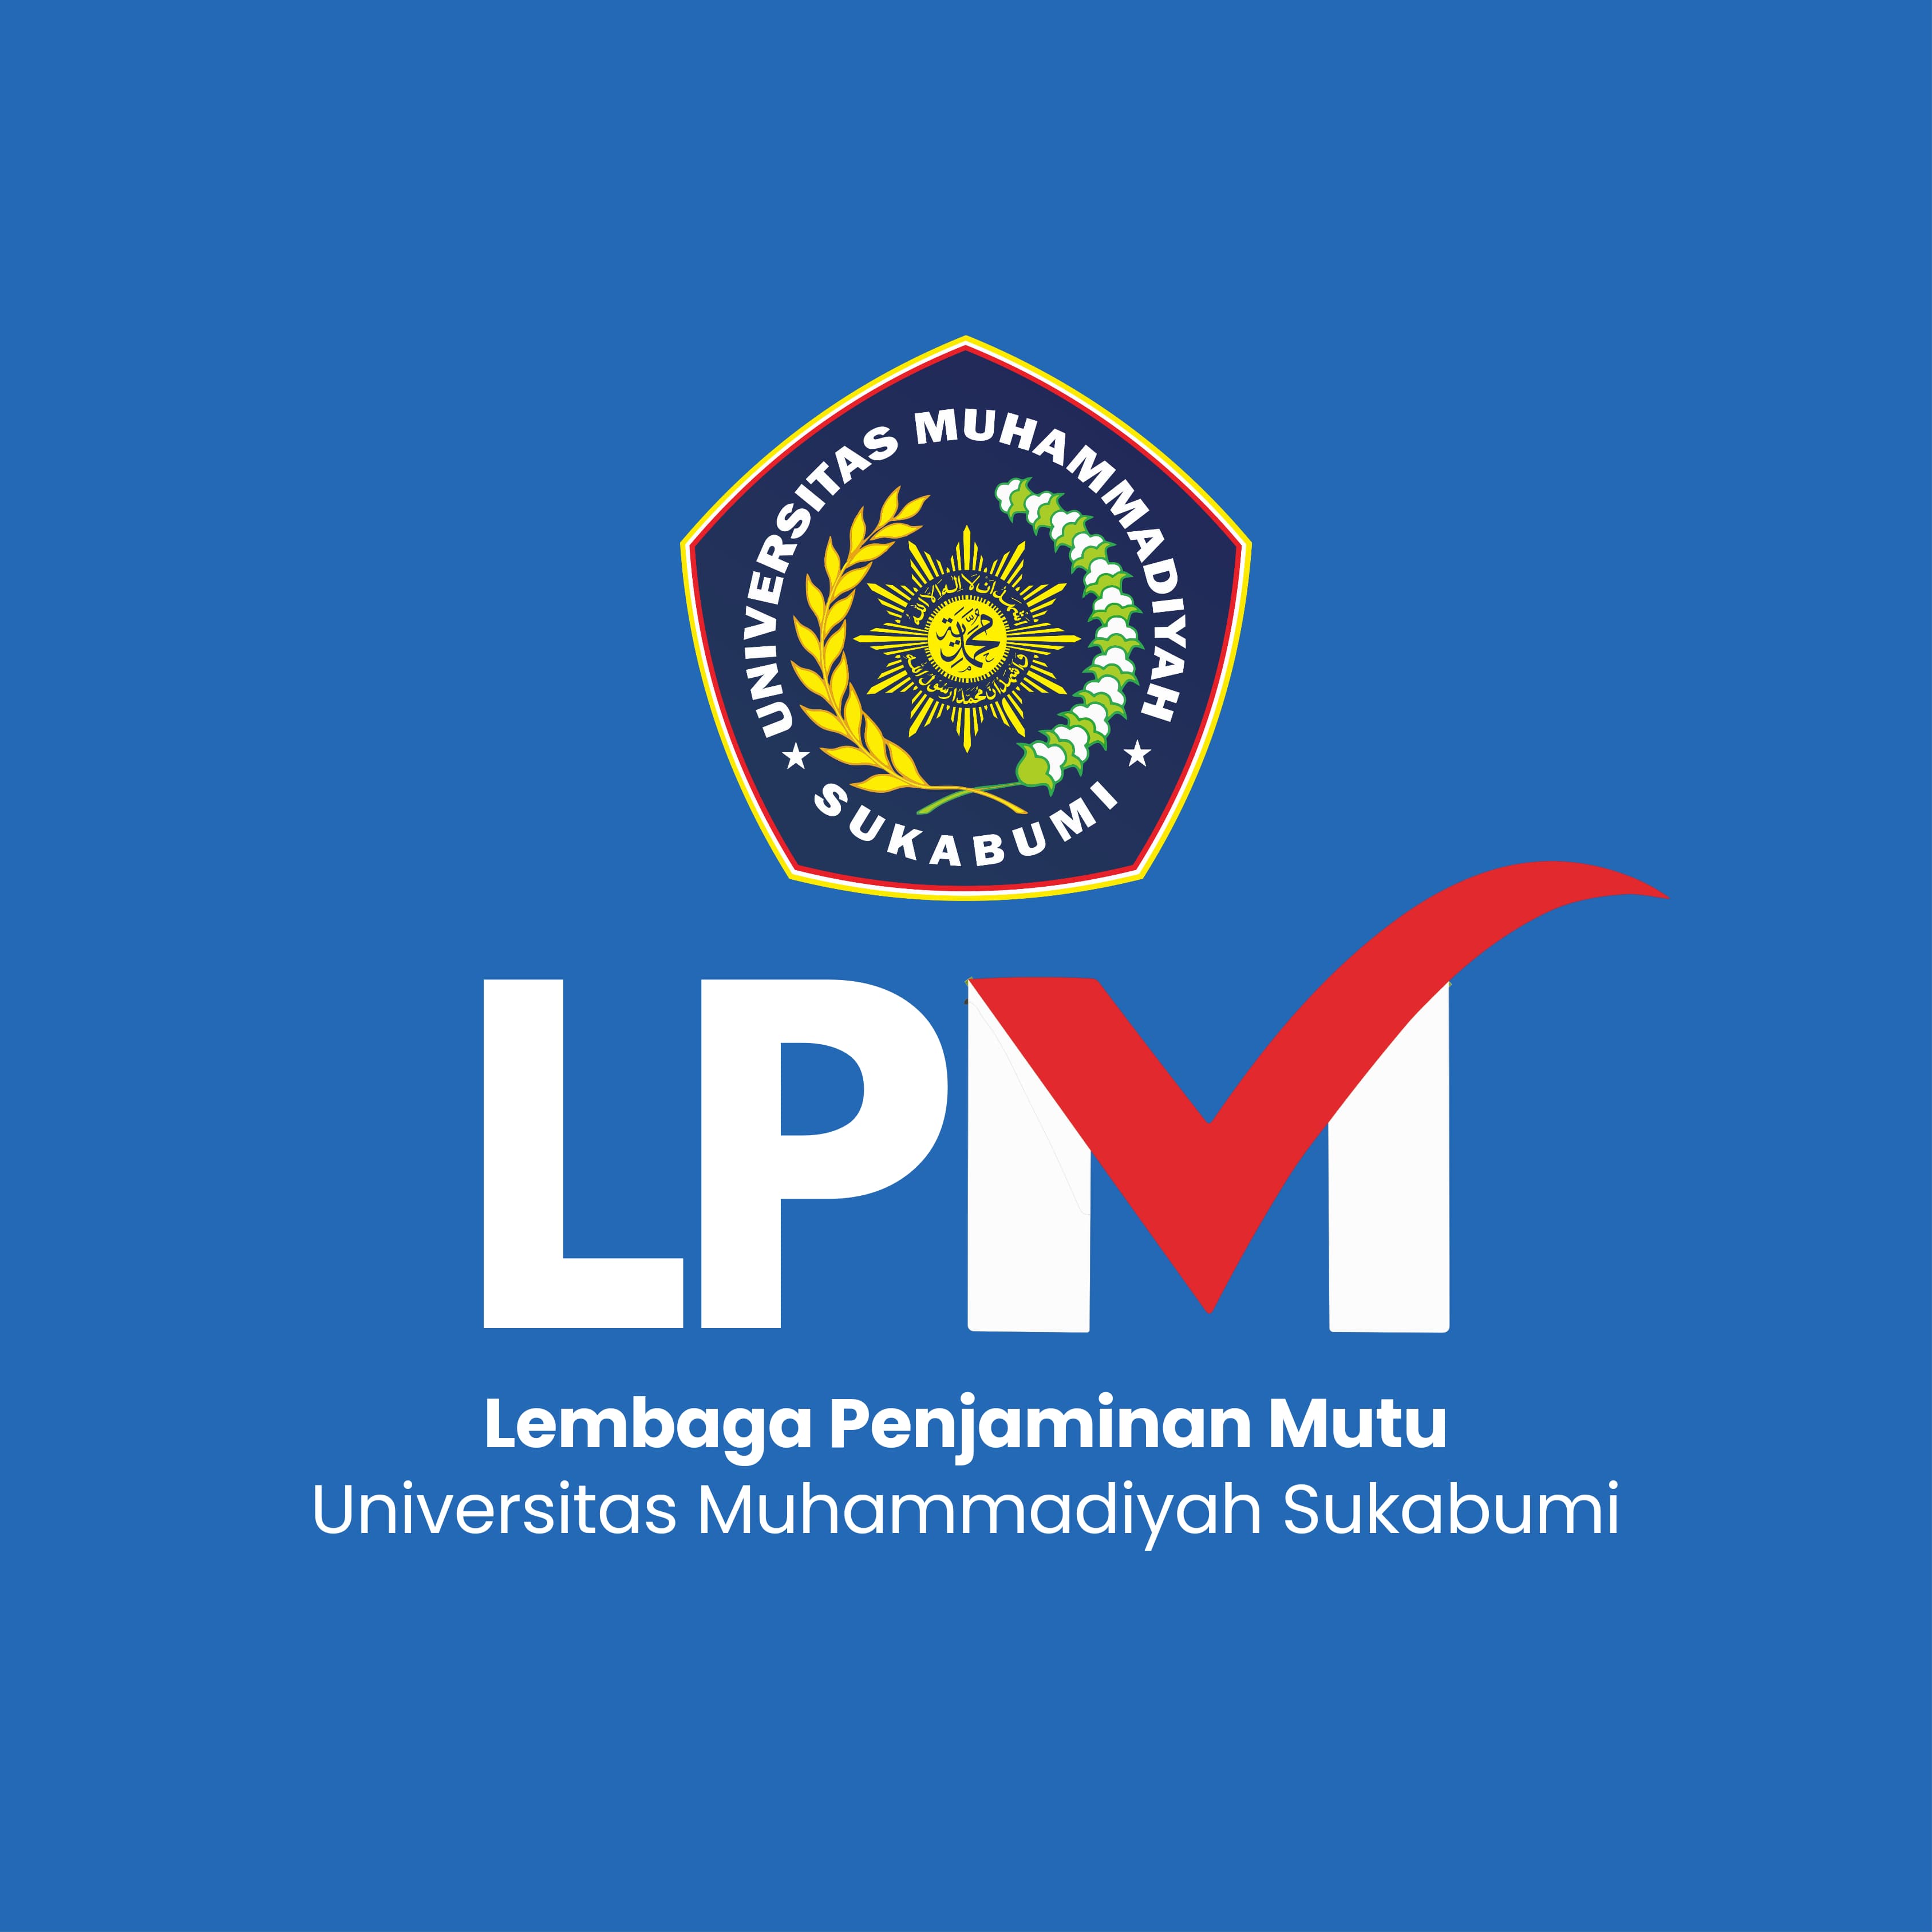 Lembaga Penjaminan Mutu Universitas Muhammadiyah Sukabumi